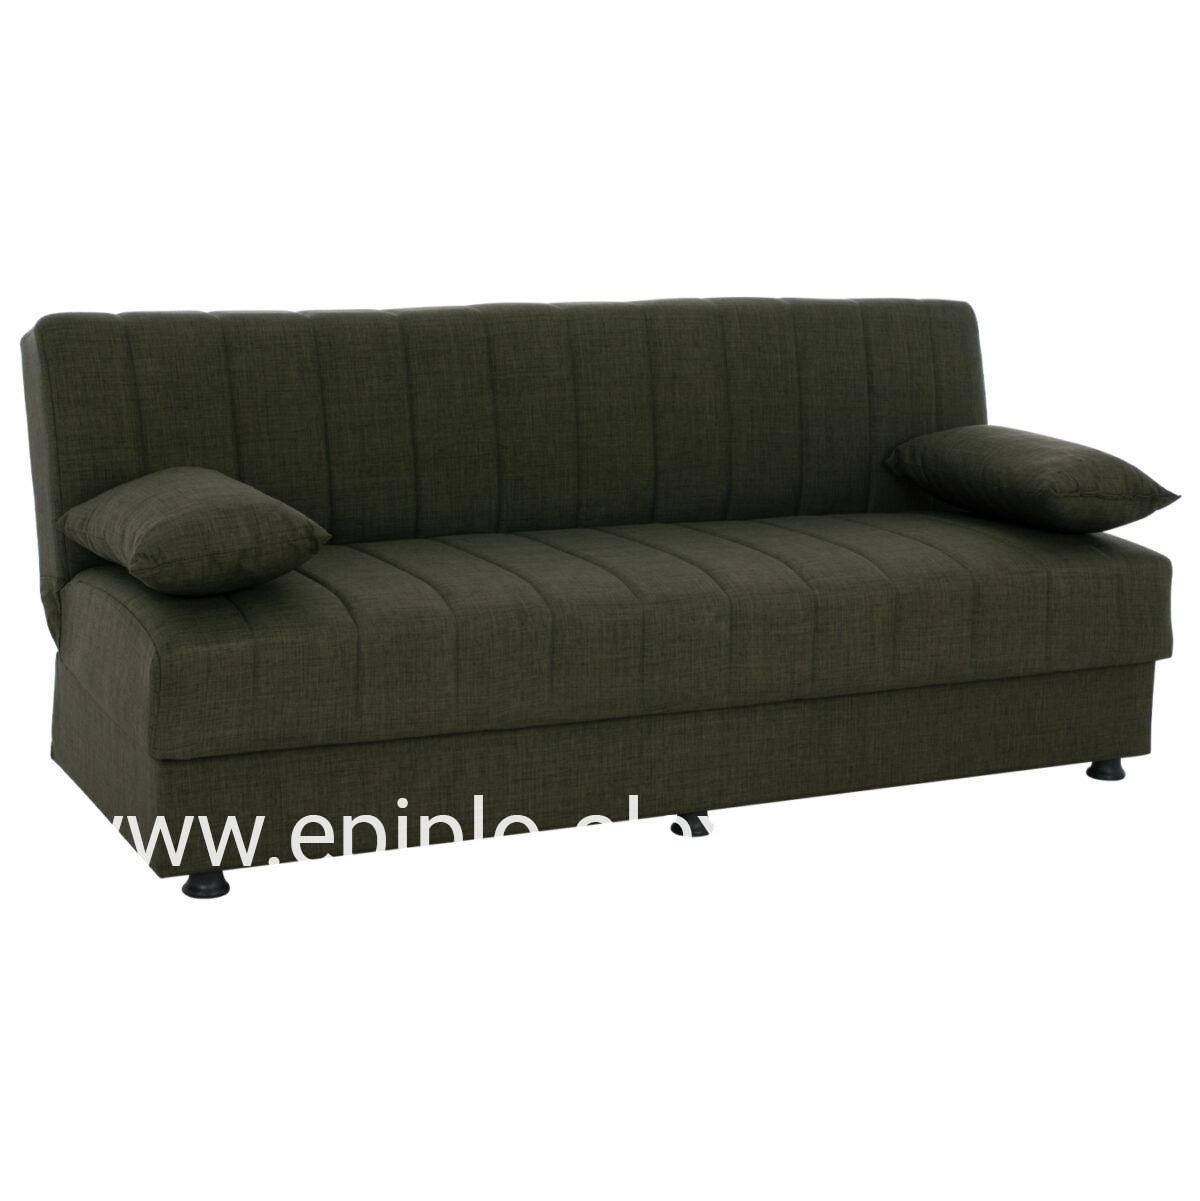 Hm3239.05 ANDRI three-seater sofa-bed